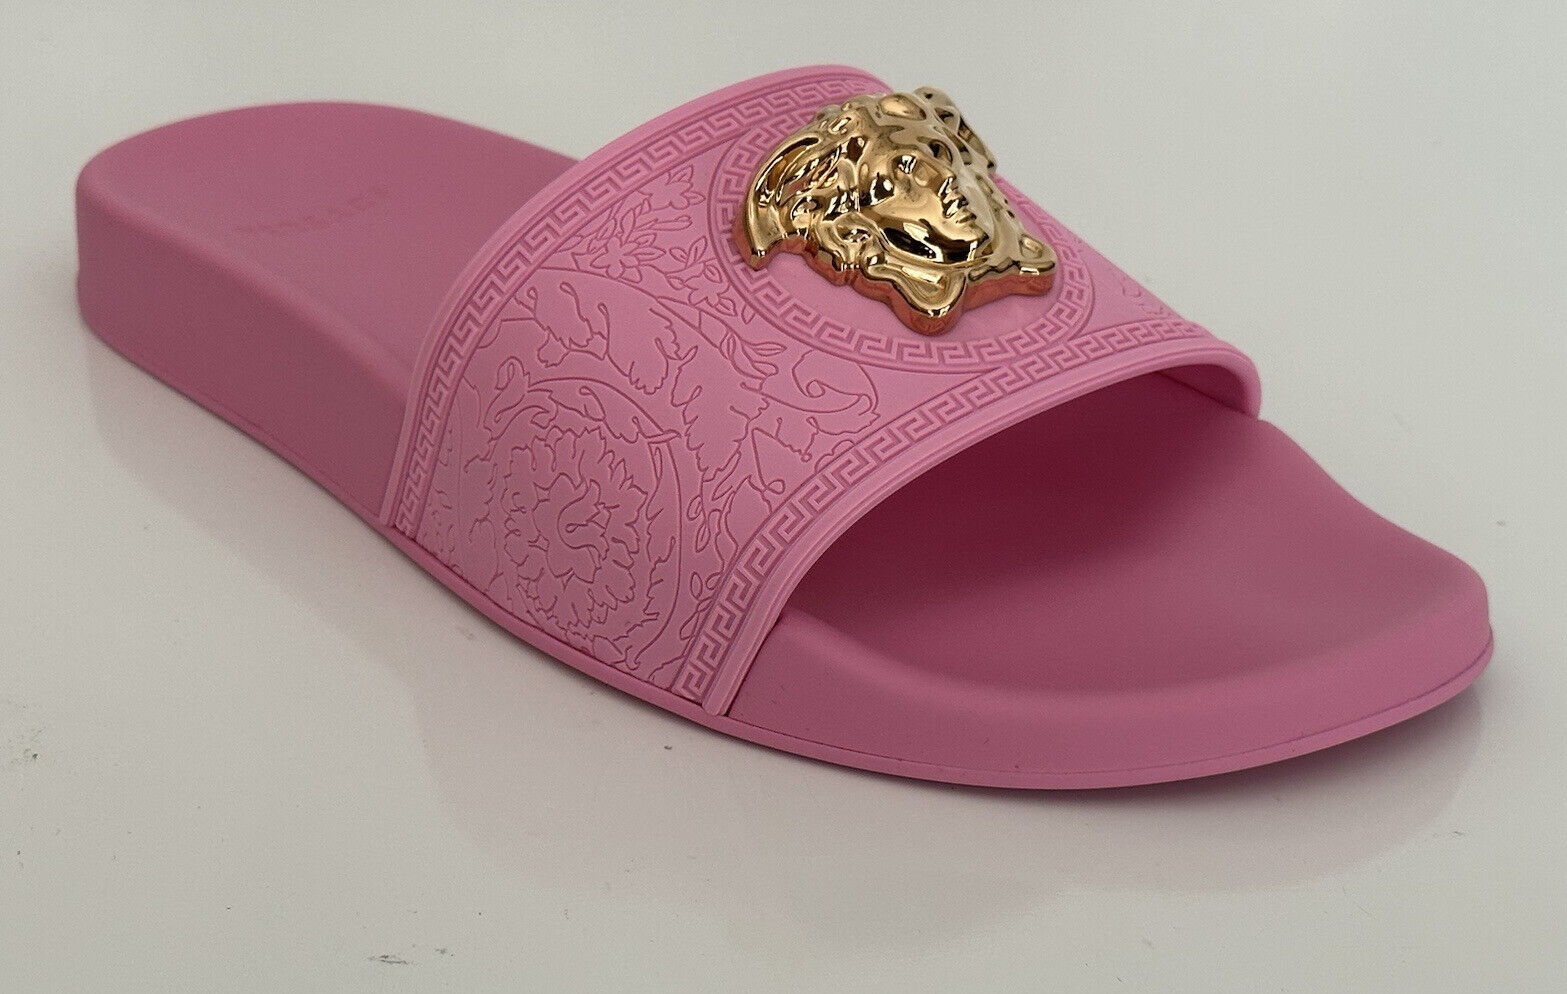 NIB $450 Versace Gold Medusa Head Slides Sandals Flamingo Pink 10.5 40.5 1004190